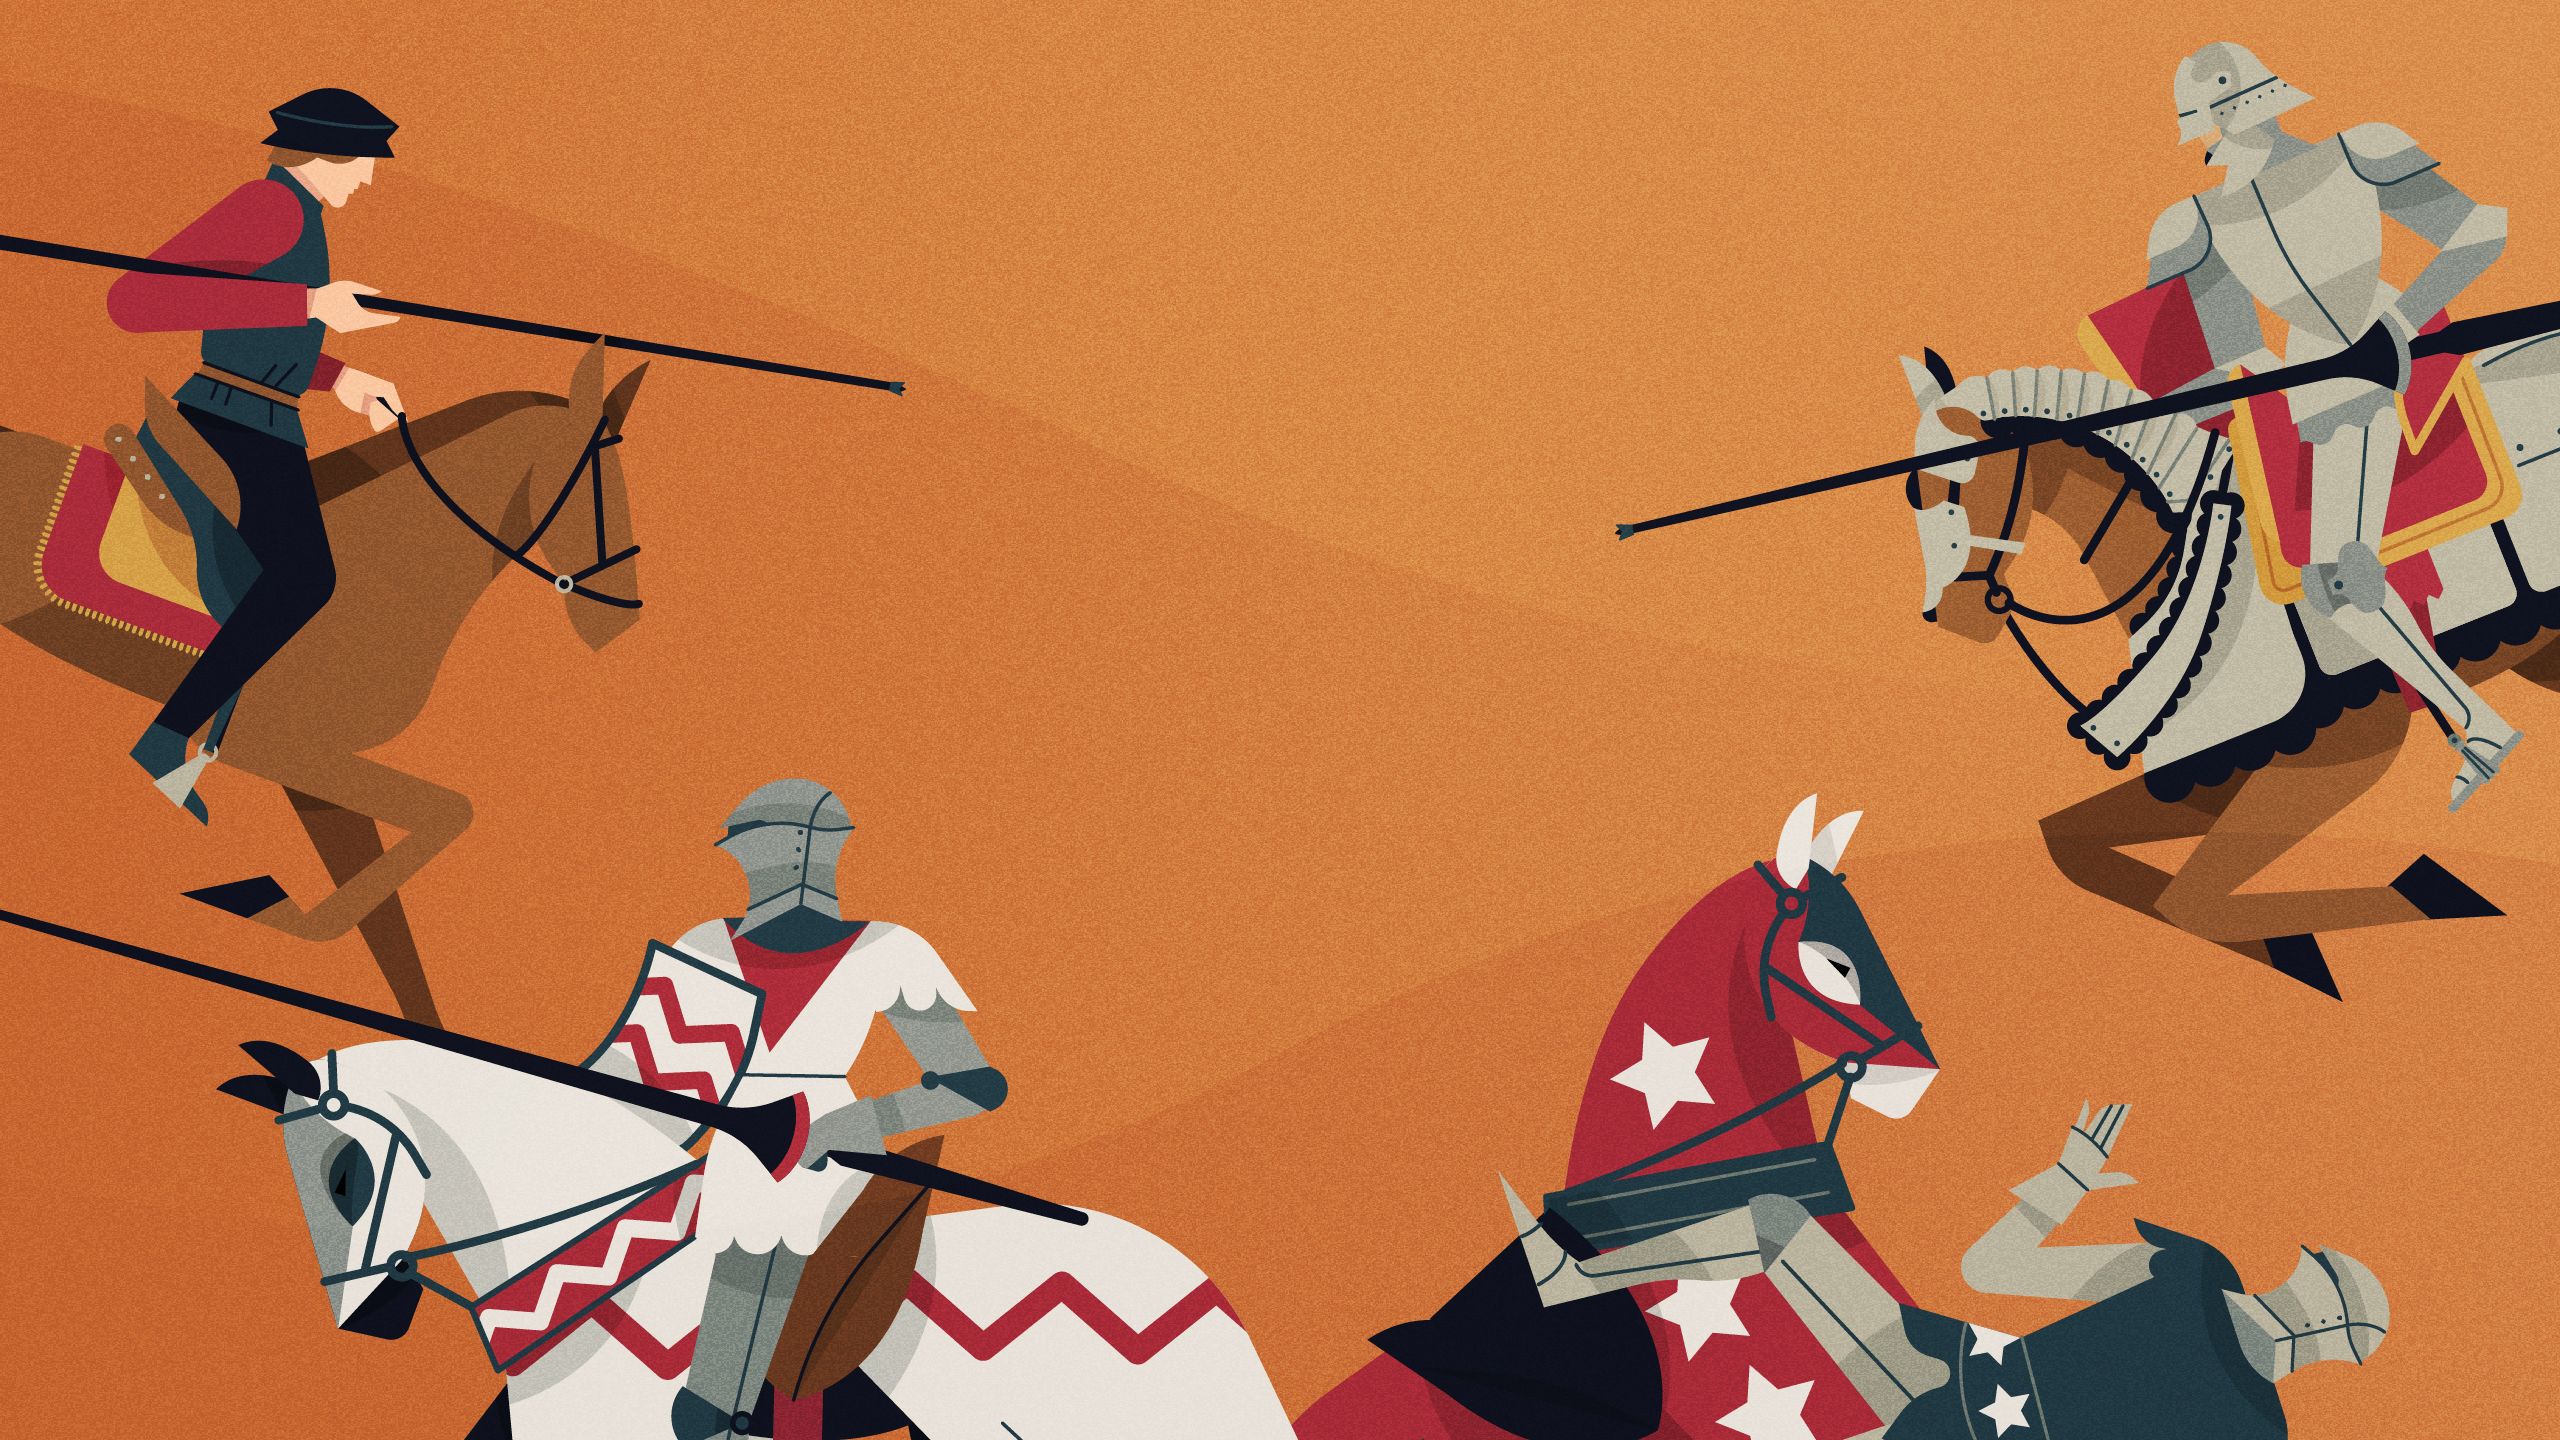 medieval knights jousting